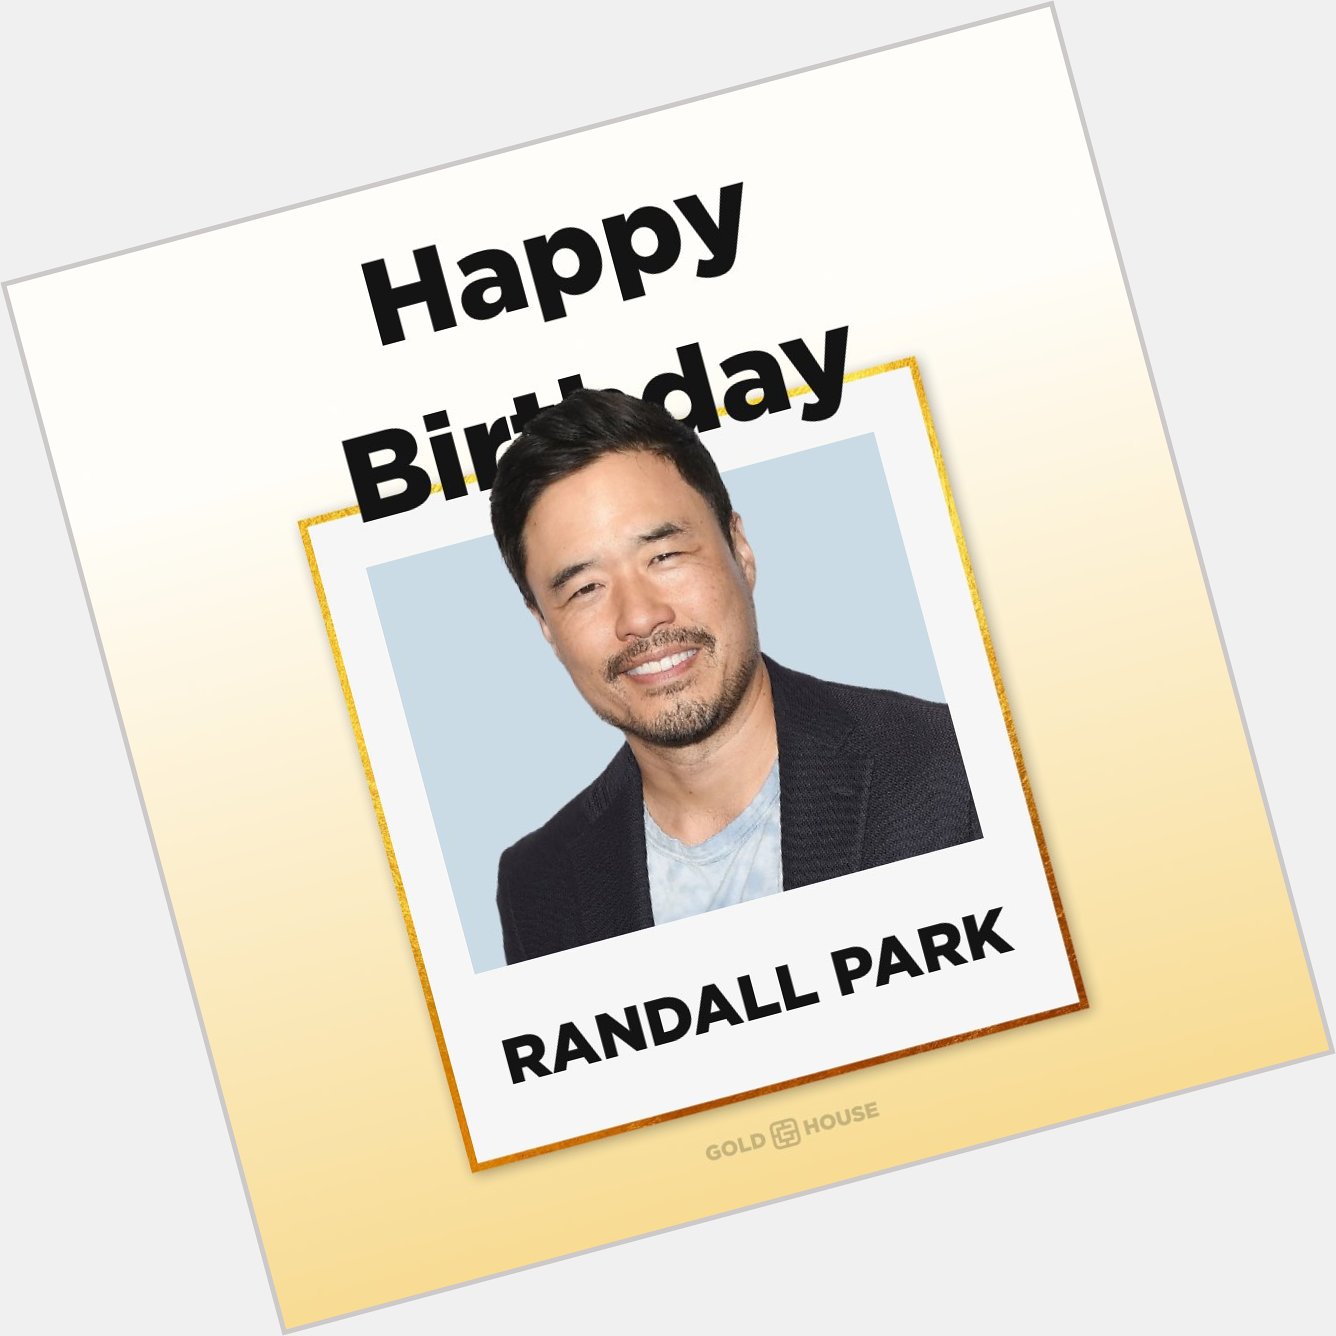 Happy birthday, Randall Park! 